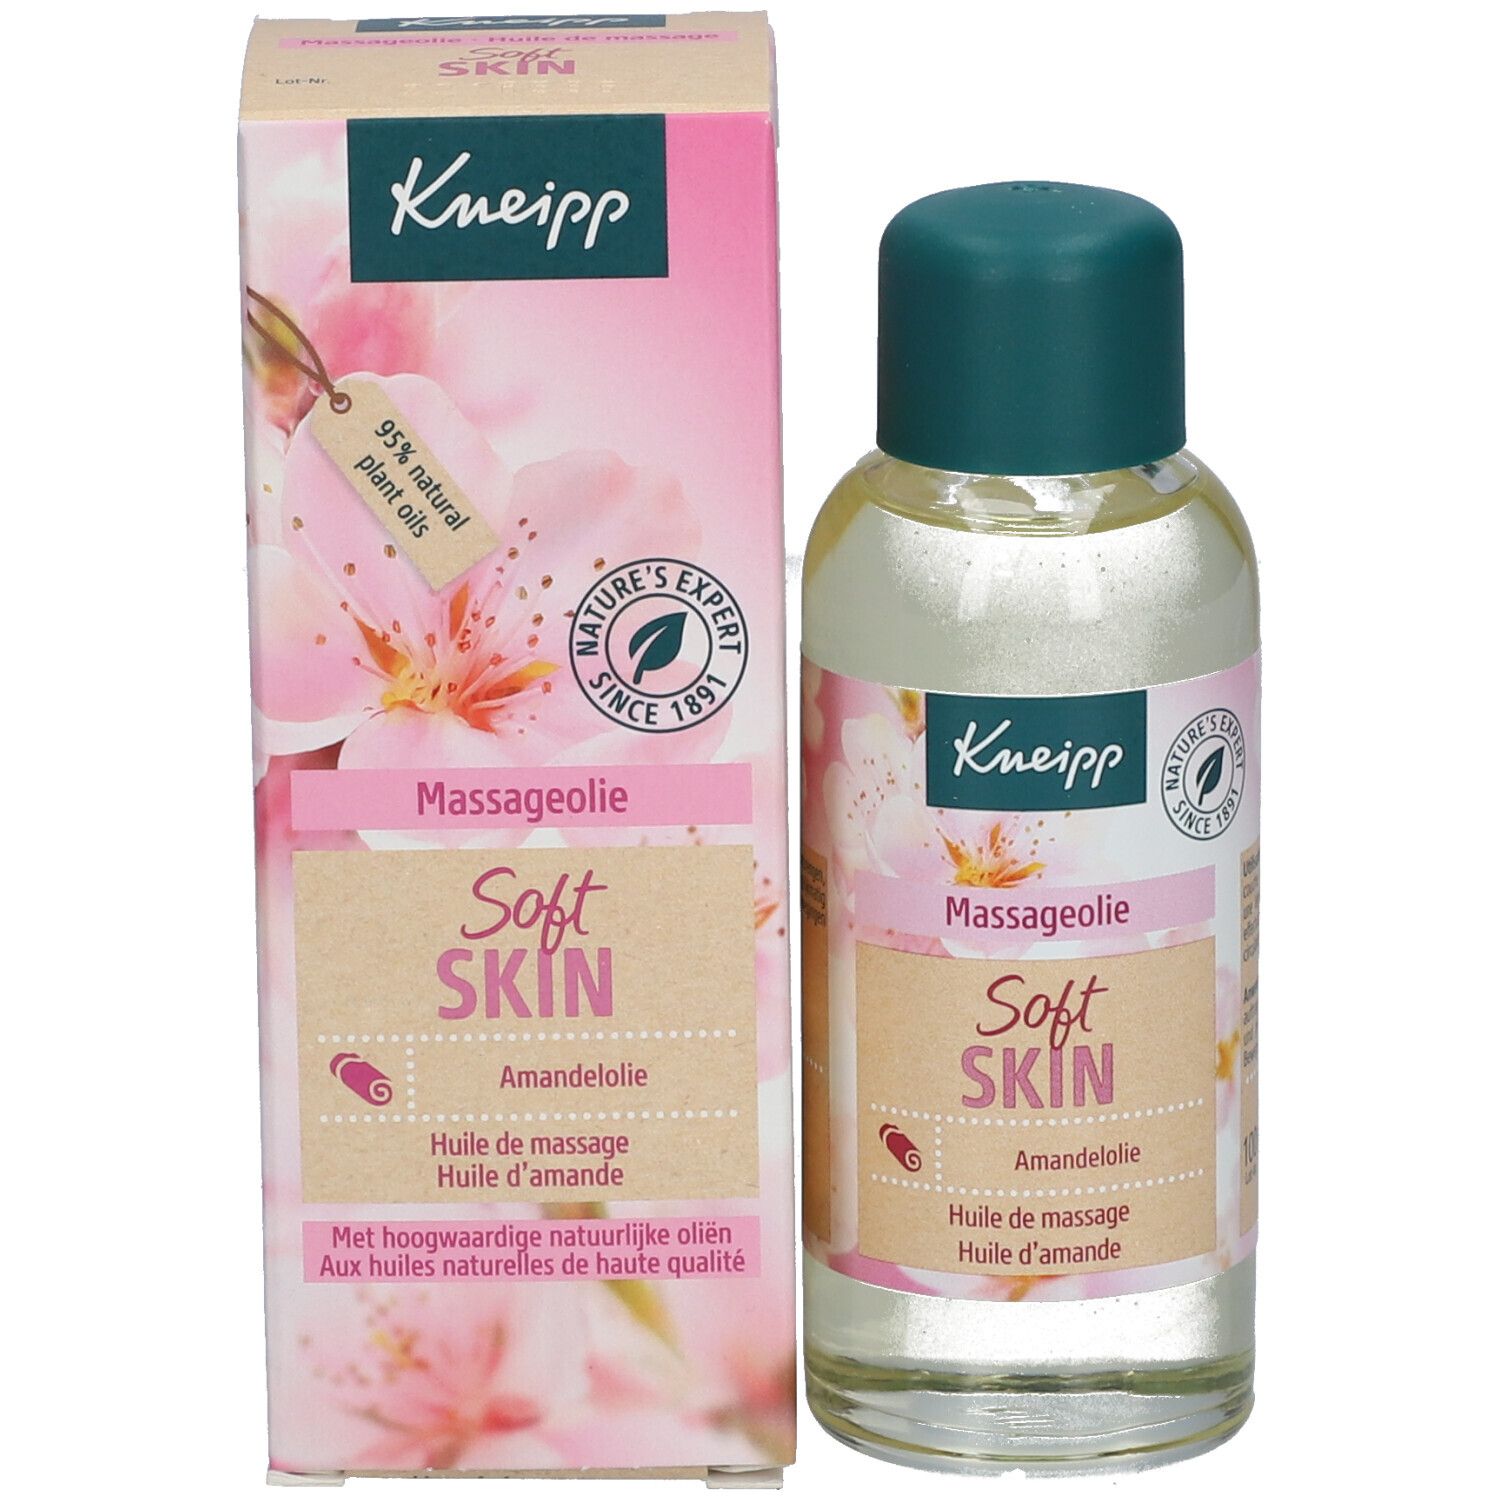 Kneipp Massage-Oil Almond